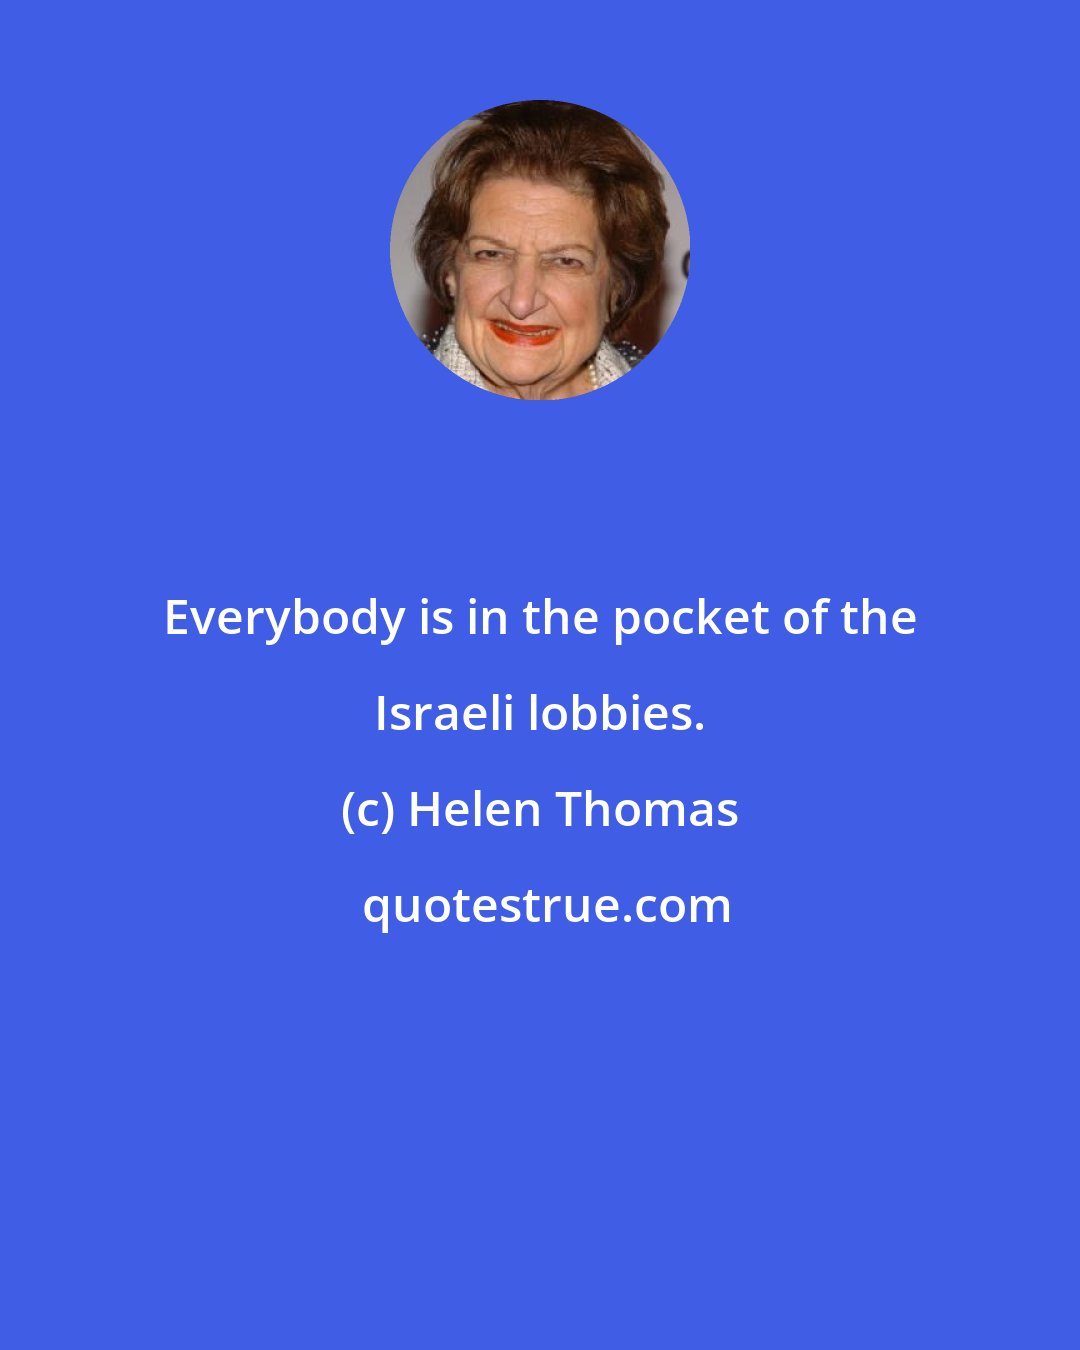 Helen Thomas: Everybody is in the pocket of the Israeli lobbies.